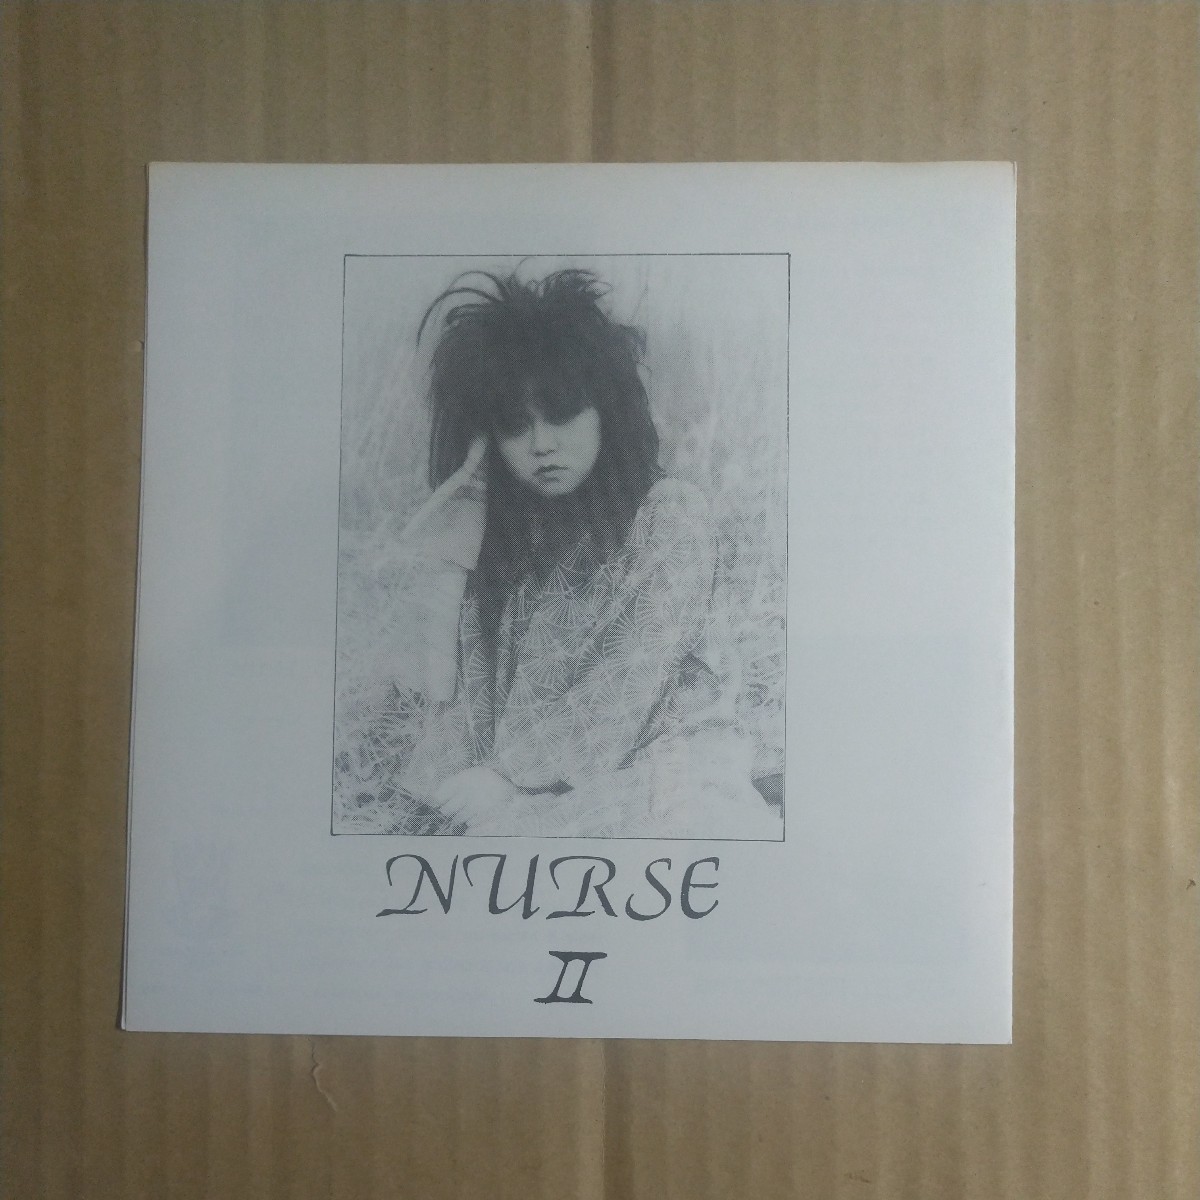  медсестра [nurse Ⅱ].EP 1984 год *post hardcore punk new wave adk stalin gastunk2